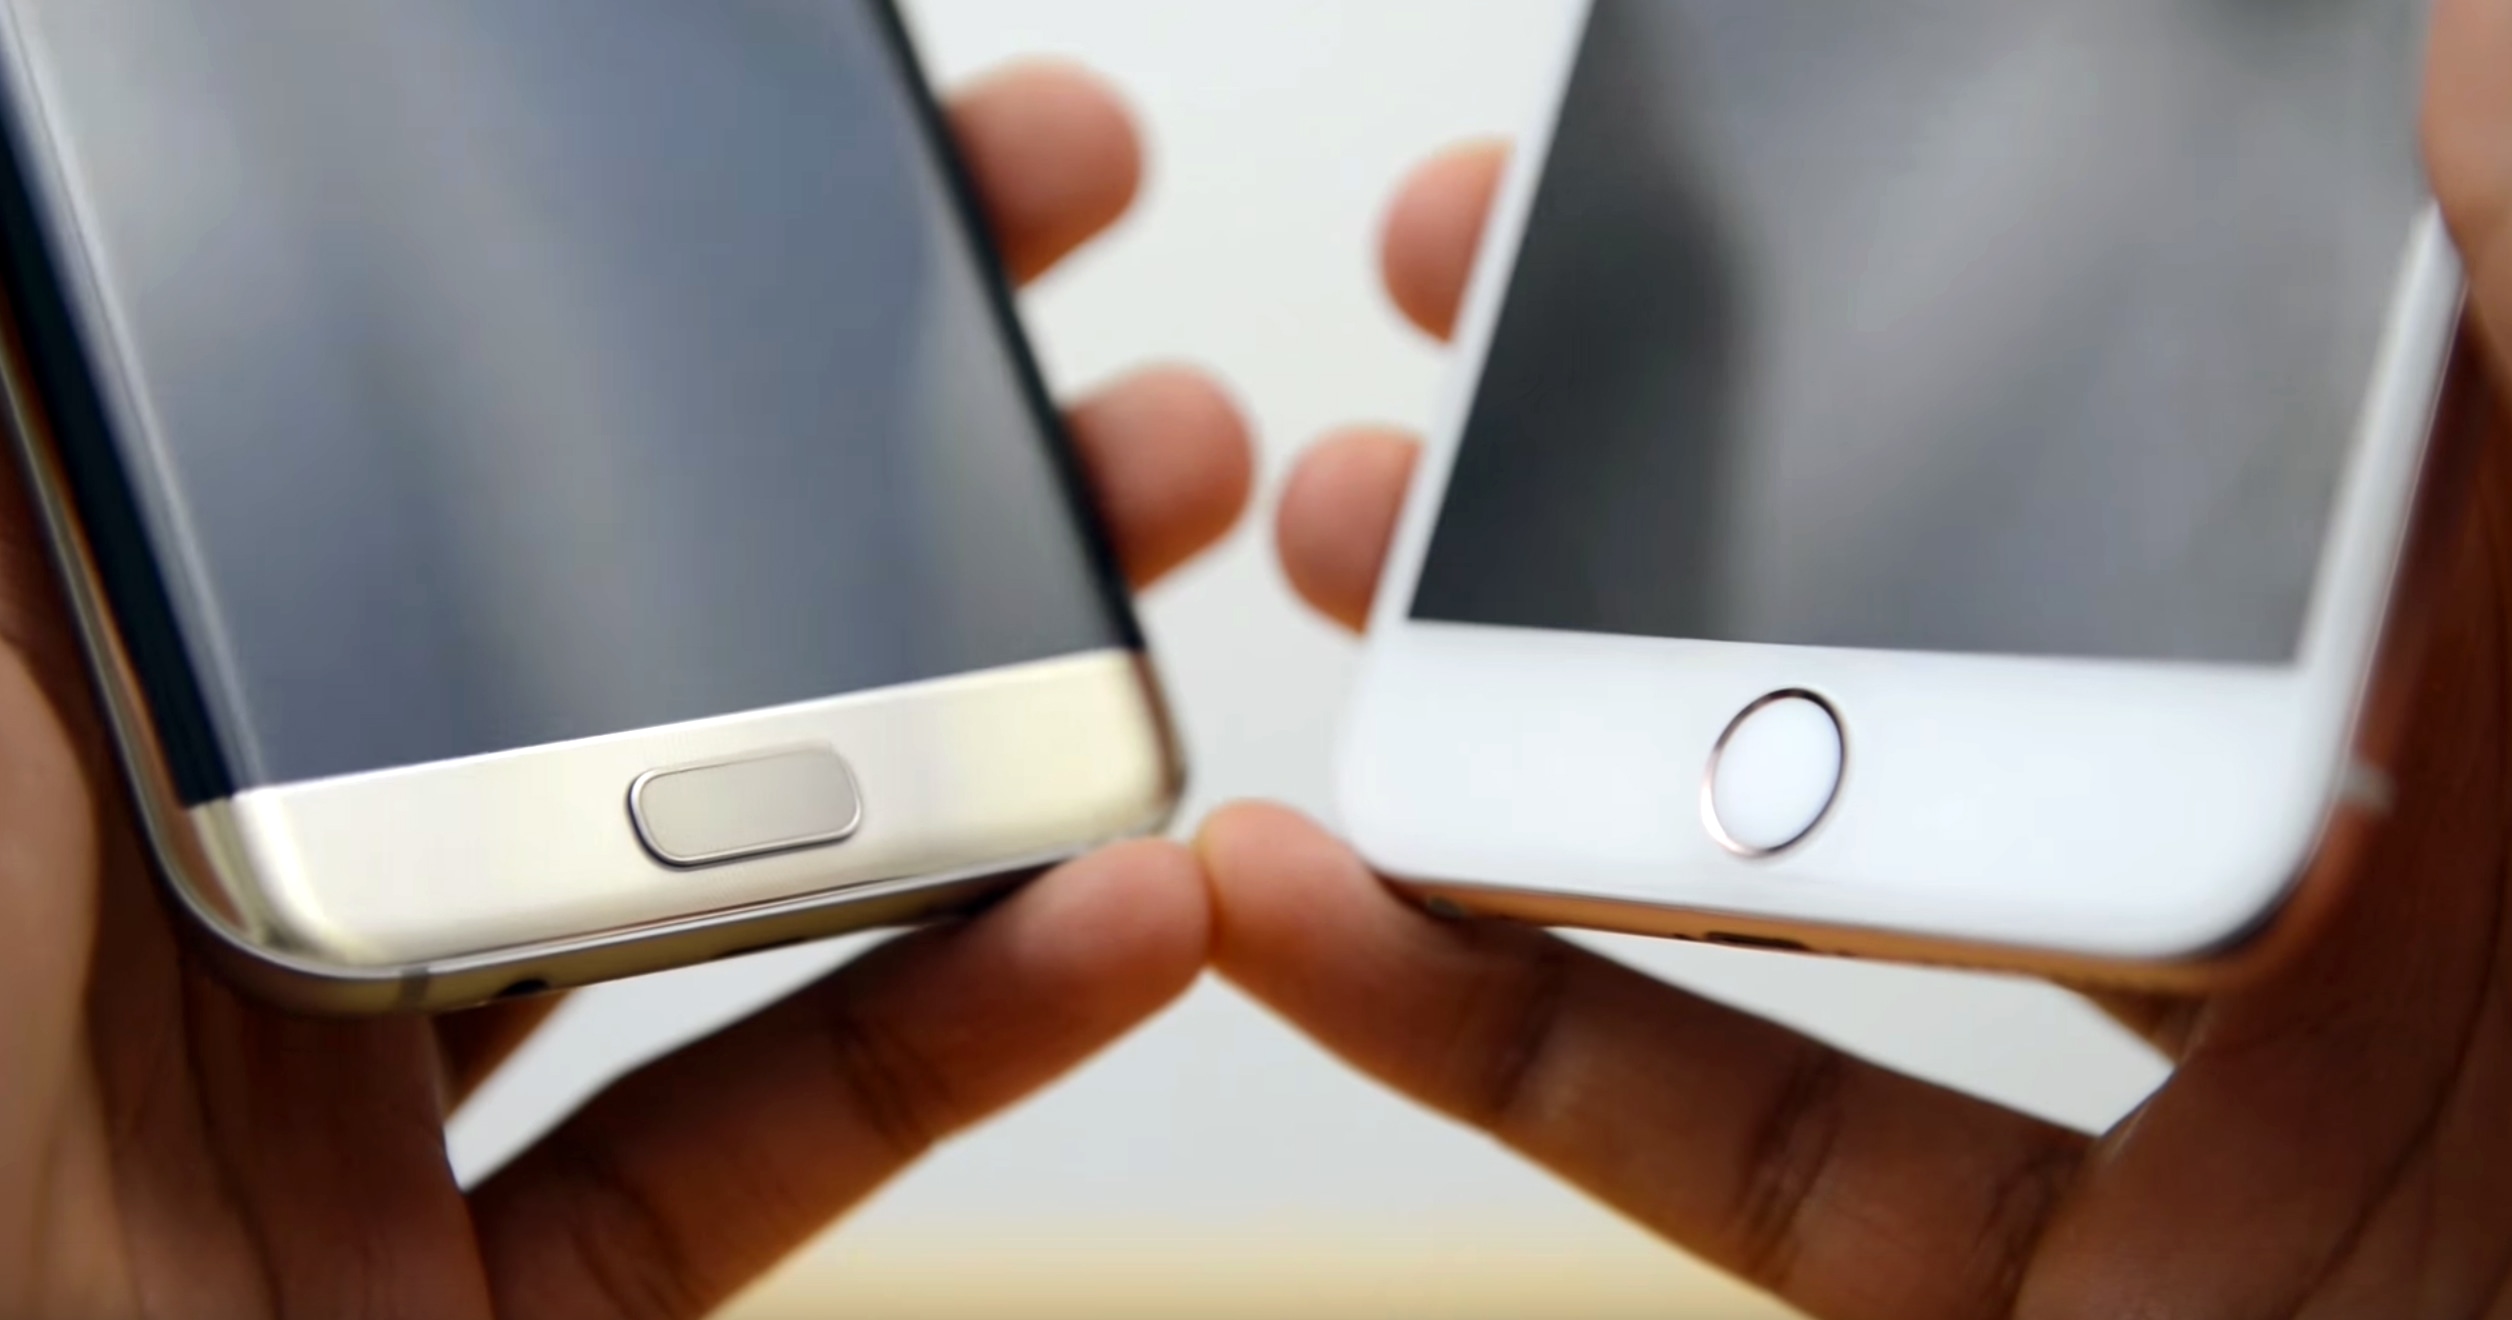 Samsung Galaxy S7 vs. iPhone 6s